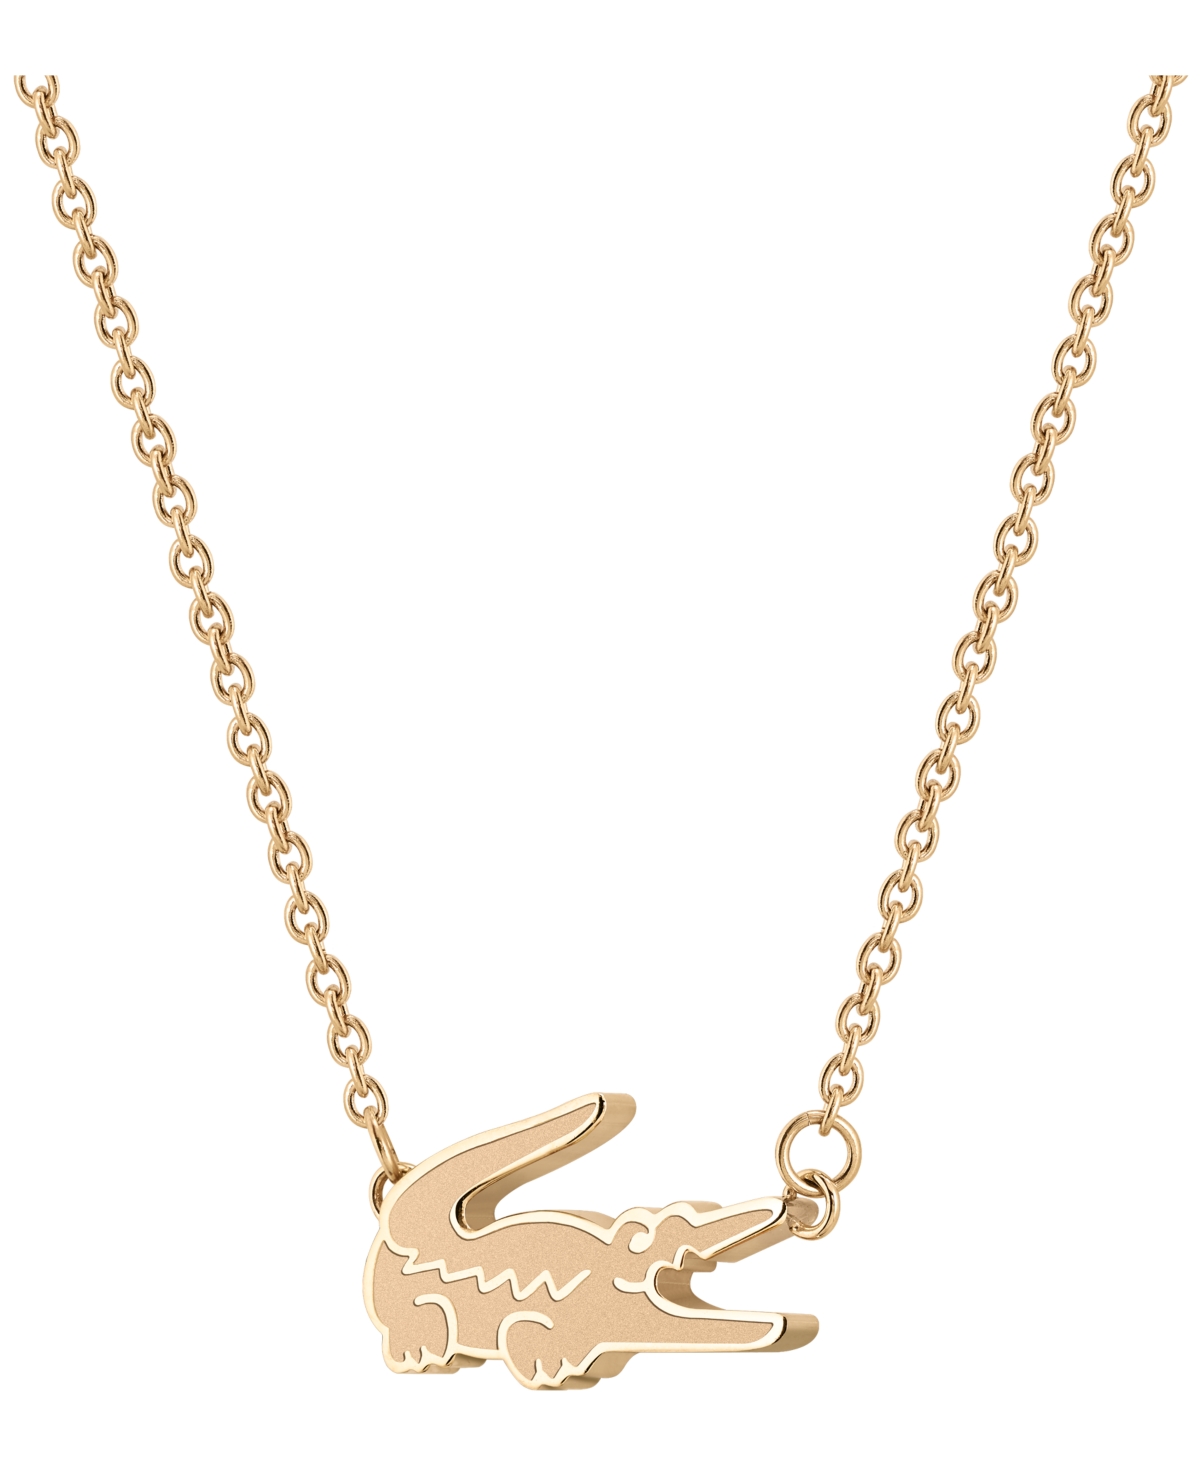 Lacoste Carnation Gold Tone Crocodile Necklace